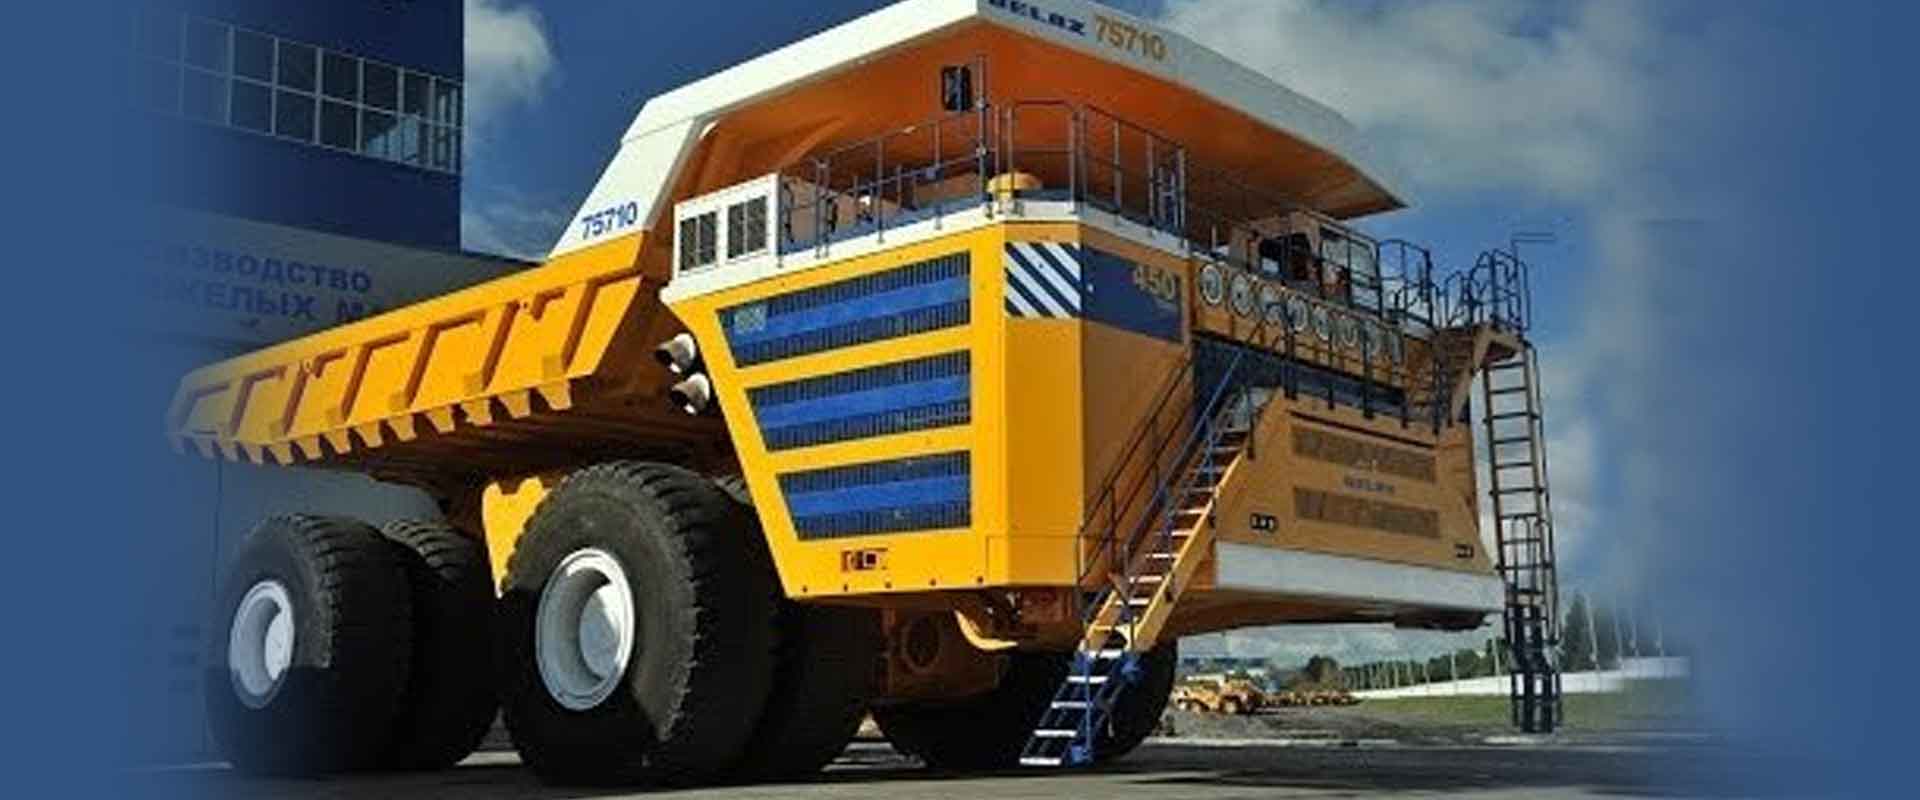 The World’s Top 5 Biggest Mining Dump Trucks 2020